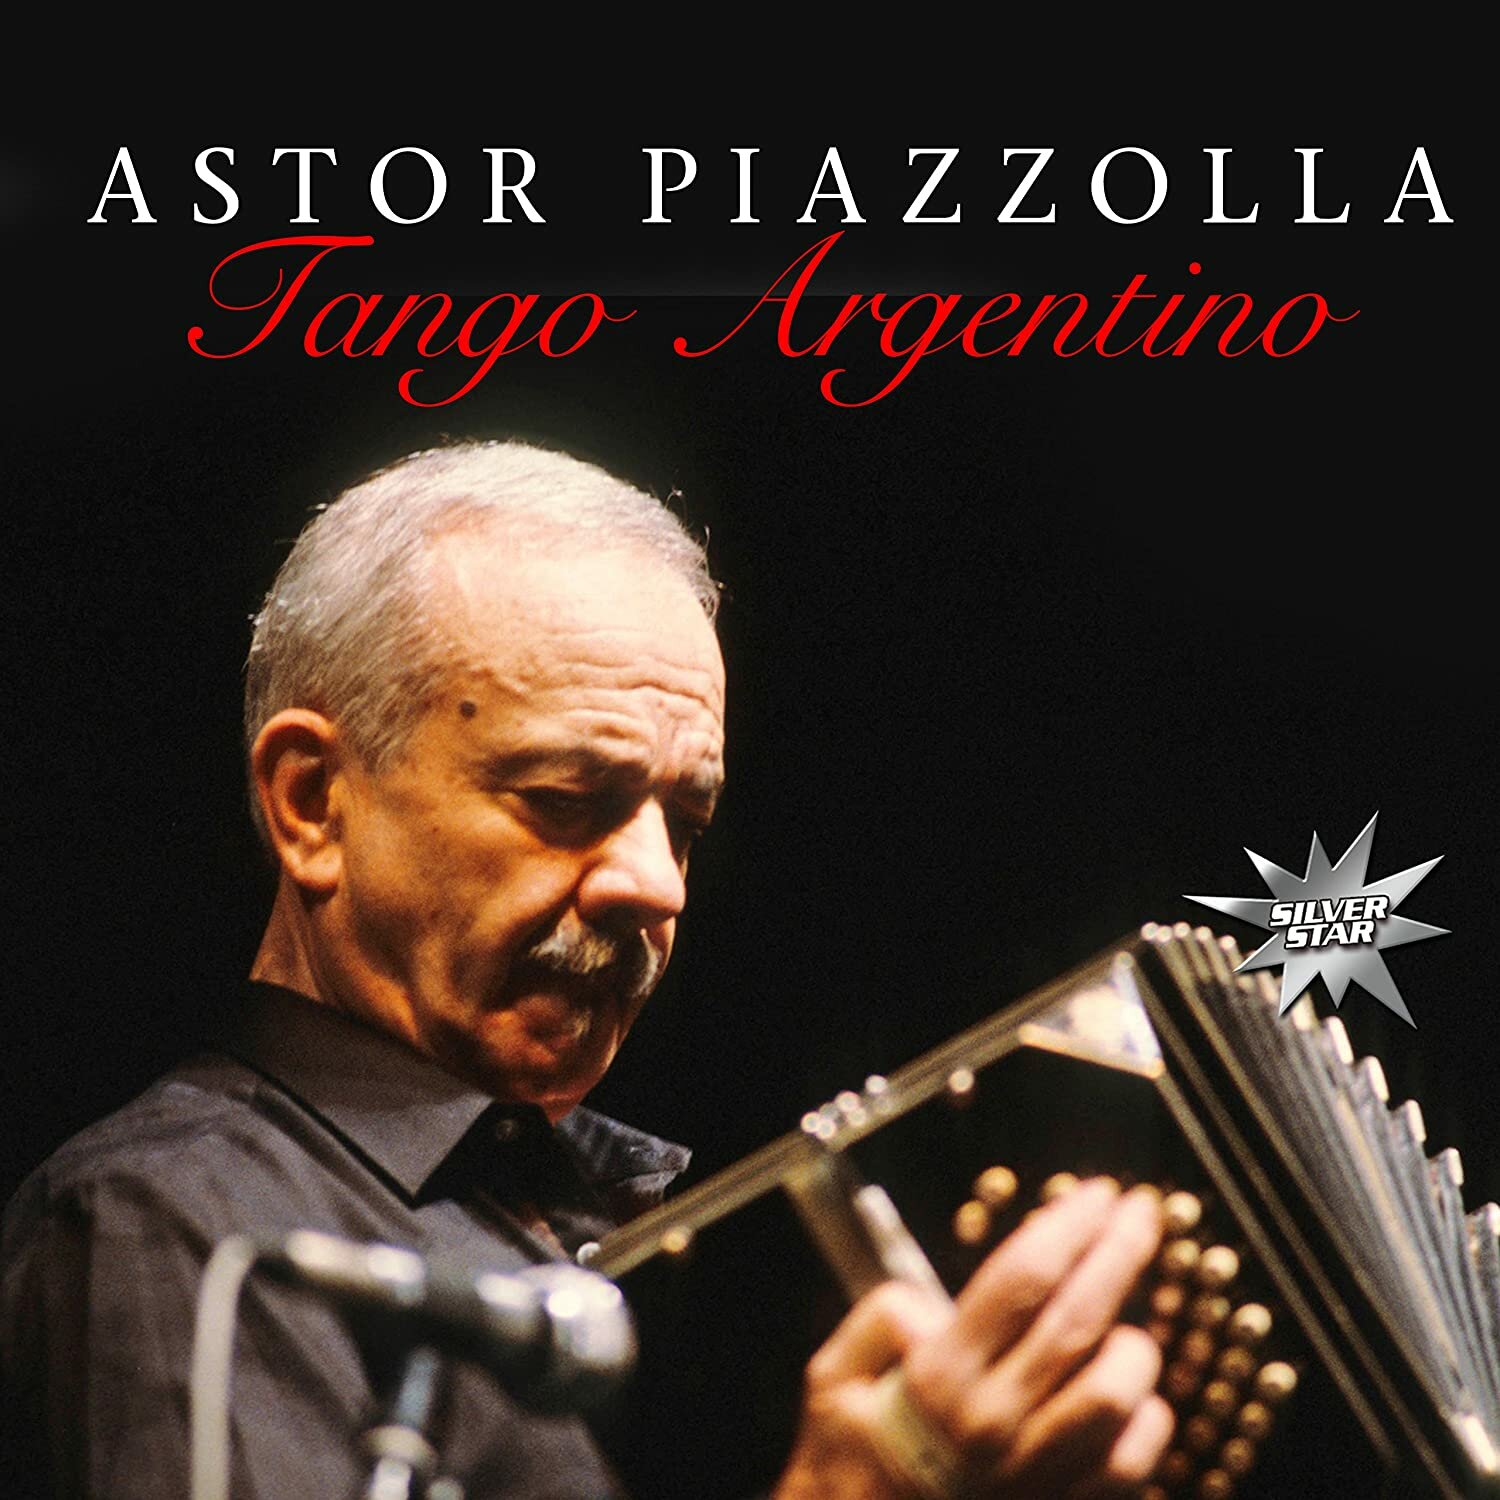 Piazzolla Astor "Виниловая пластинка Piazzolla Astor Tango Argentino"